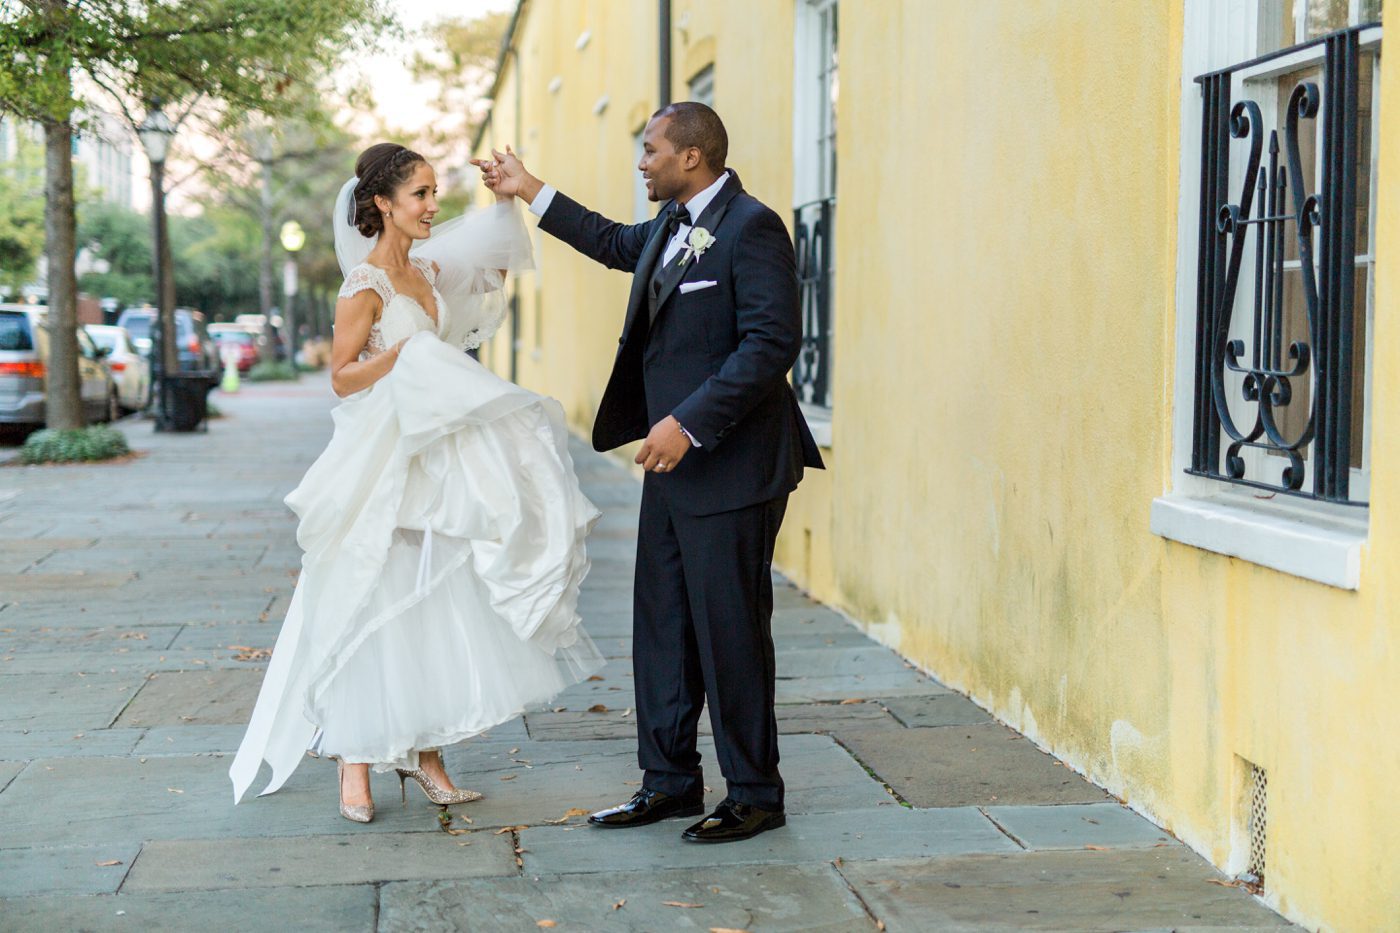 Groom twirling bride photo | Elegant William Aiken House Wedding Photos | Charleston SC wedding photographers Catherine Ann Photography